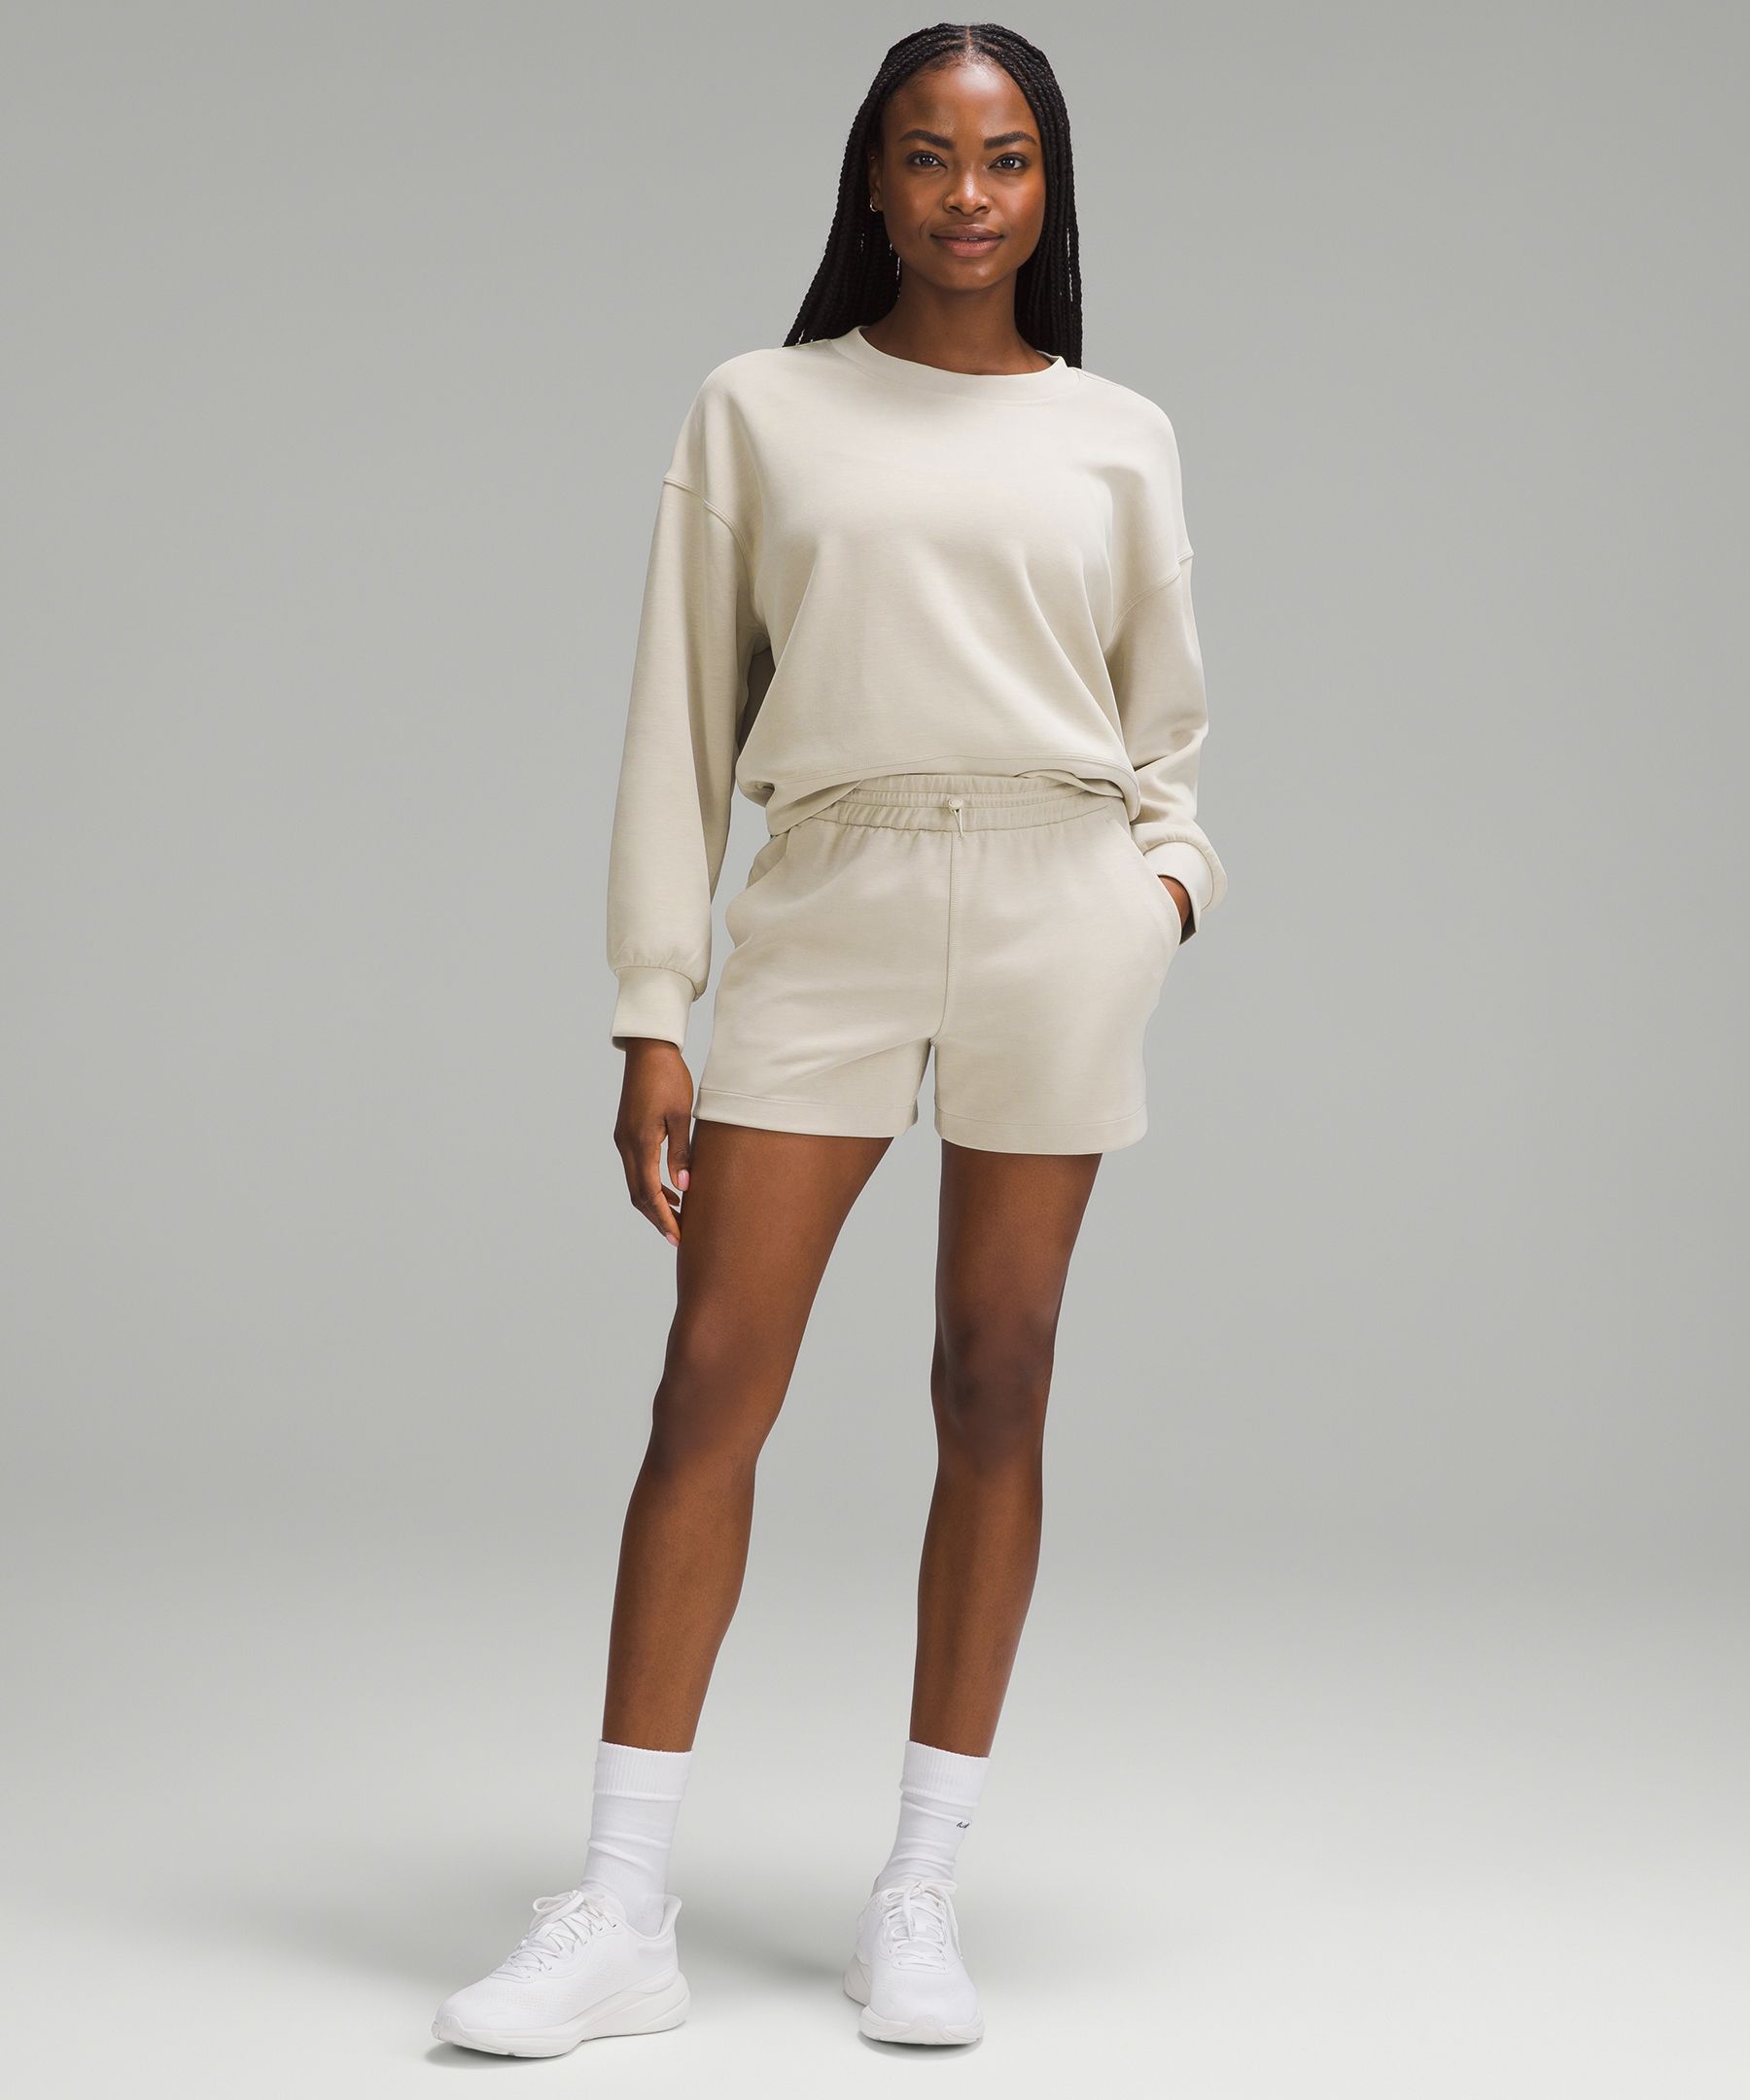 Soft Surroundings Superla Stretch 9 Shorts - White - Sz XS (2/4